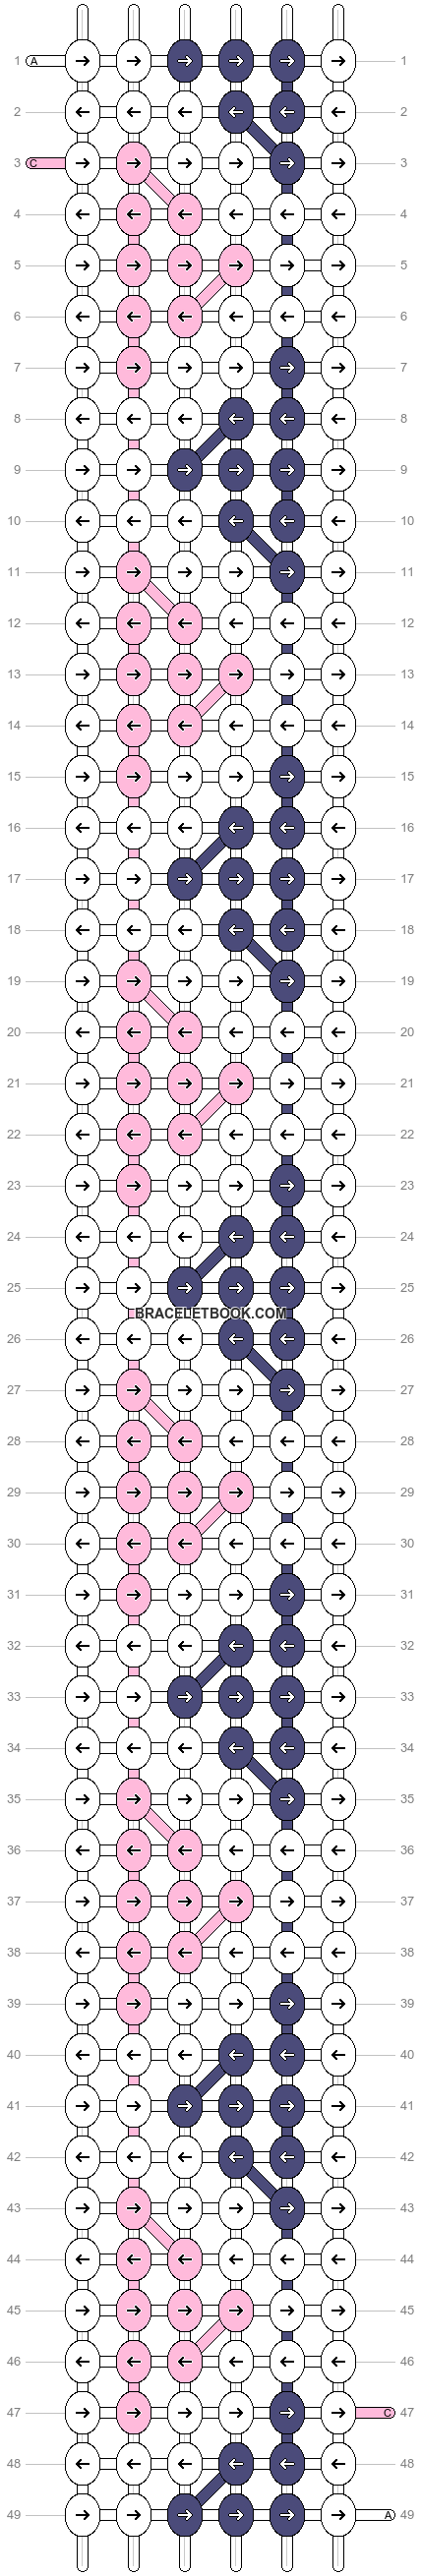 Alpha pattern #17842 variation #35820 pattern